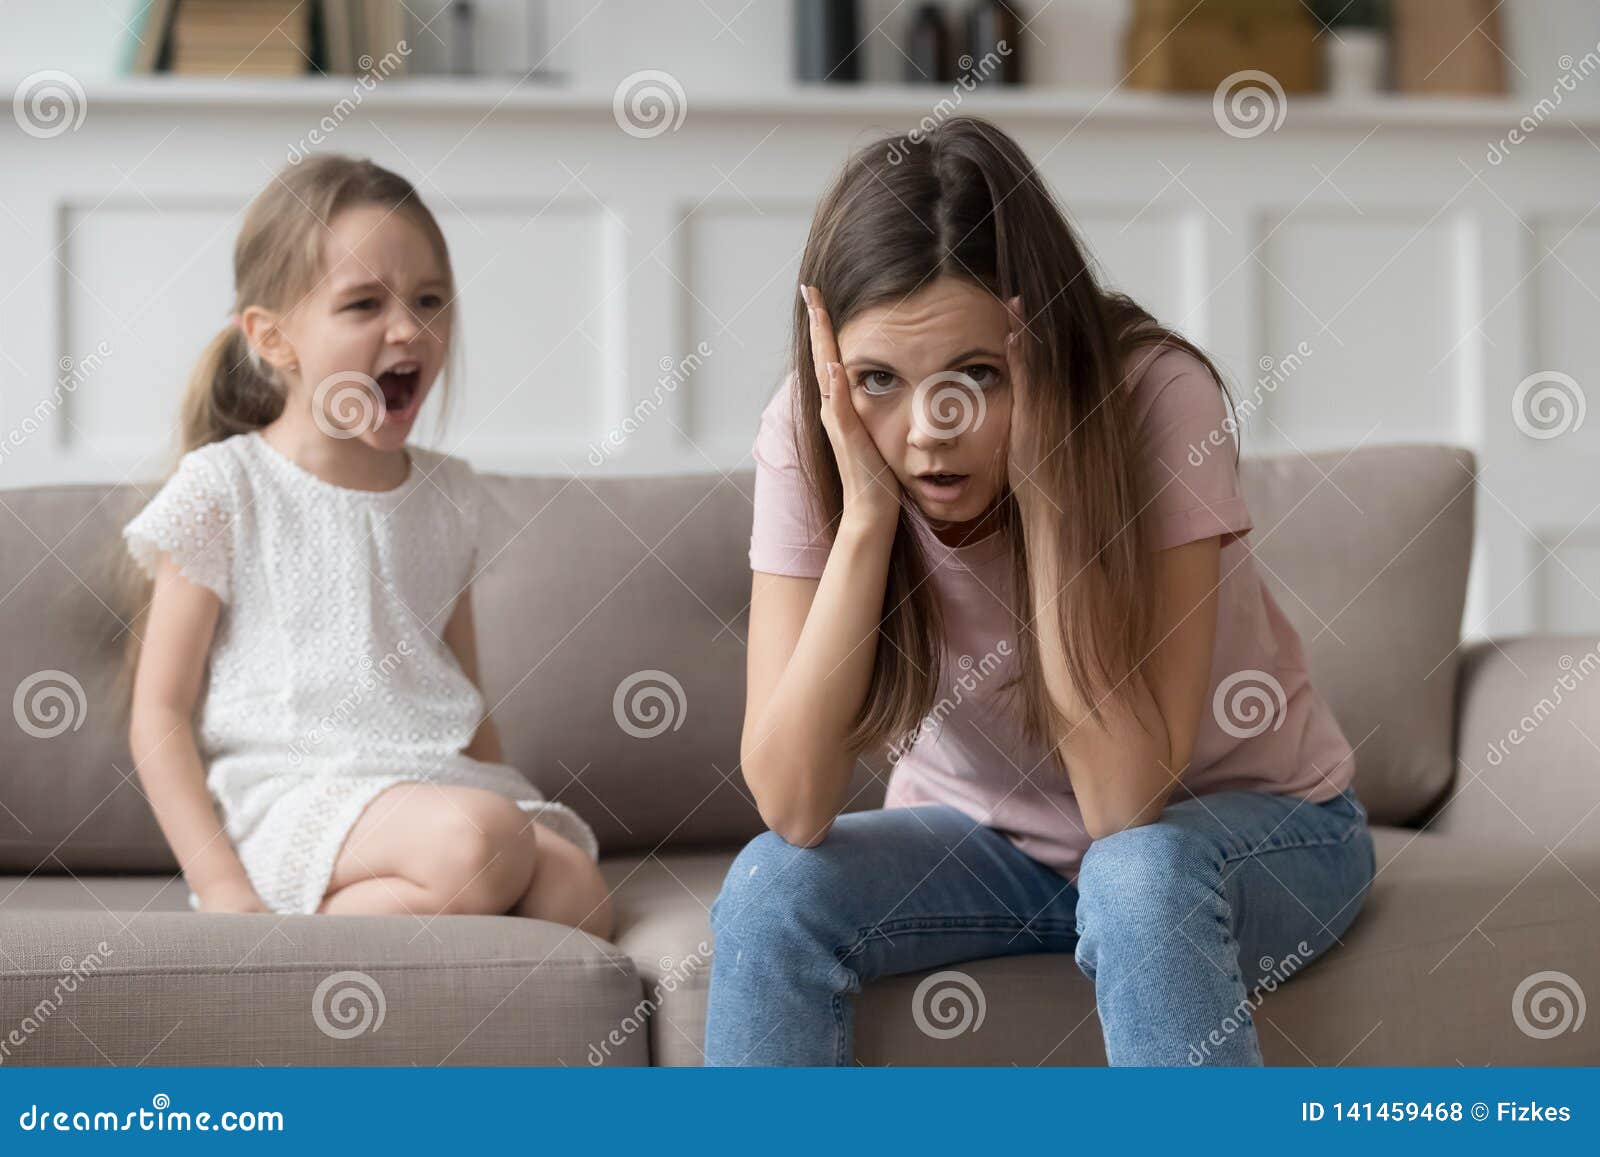 stressed mother feeling desperate about screaming stubborn kid daughter tantrum